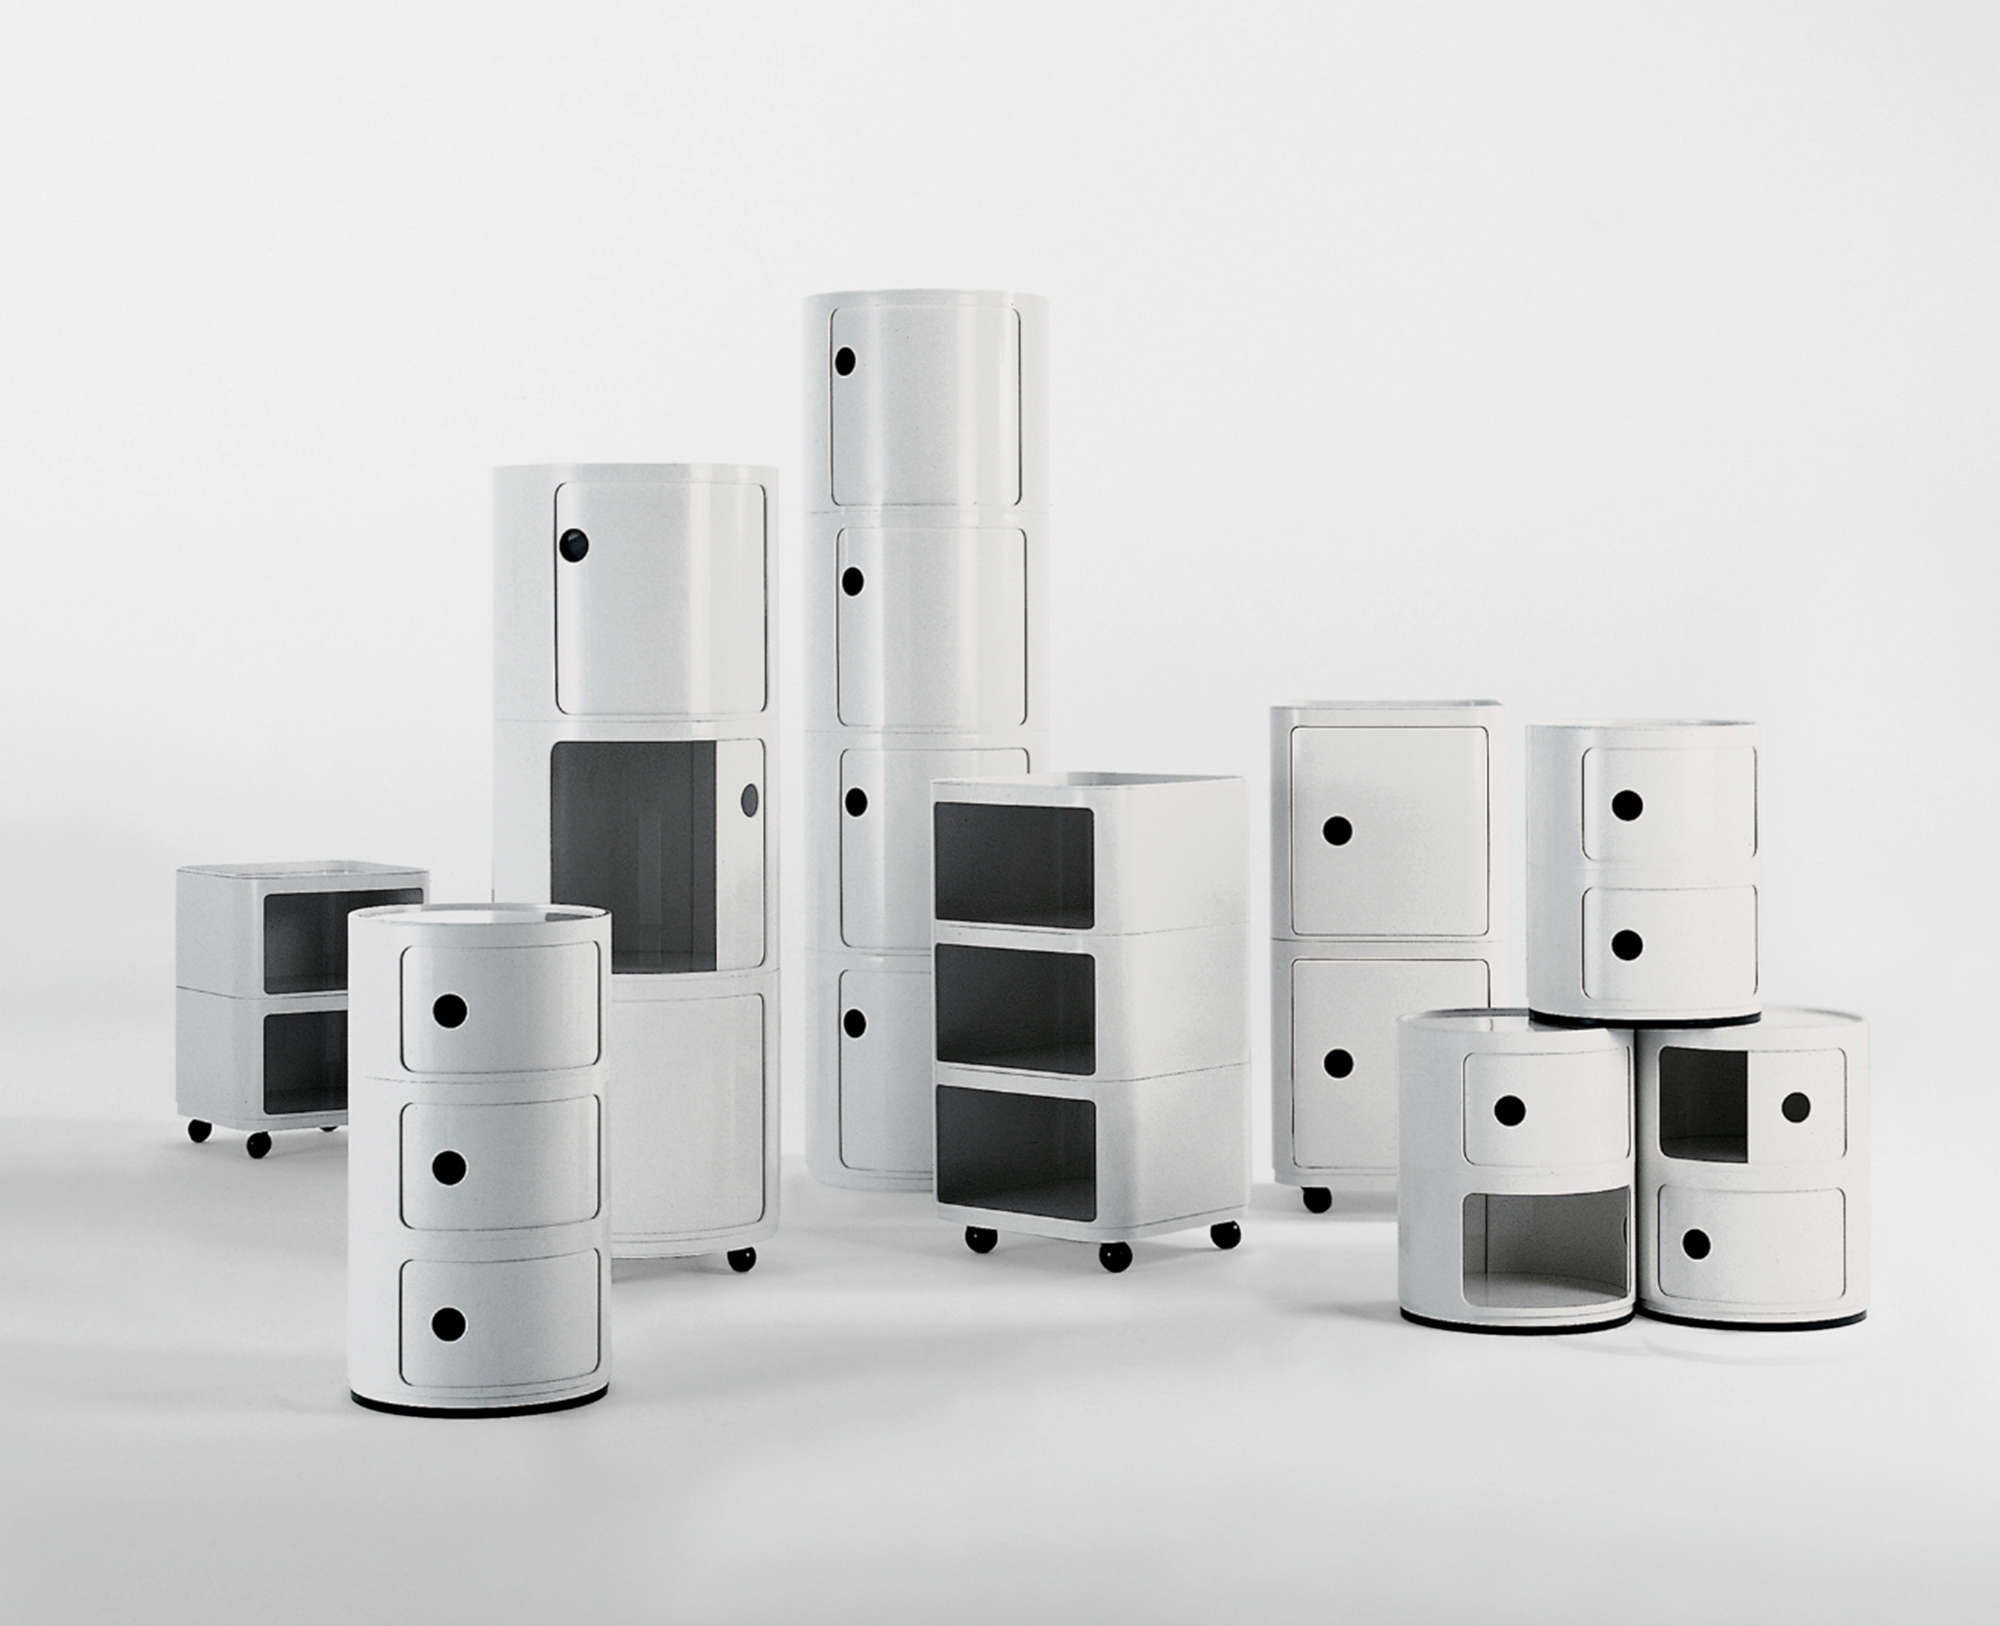 The Componibili Modular Storage System by Anna Castelli Ferrieri